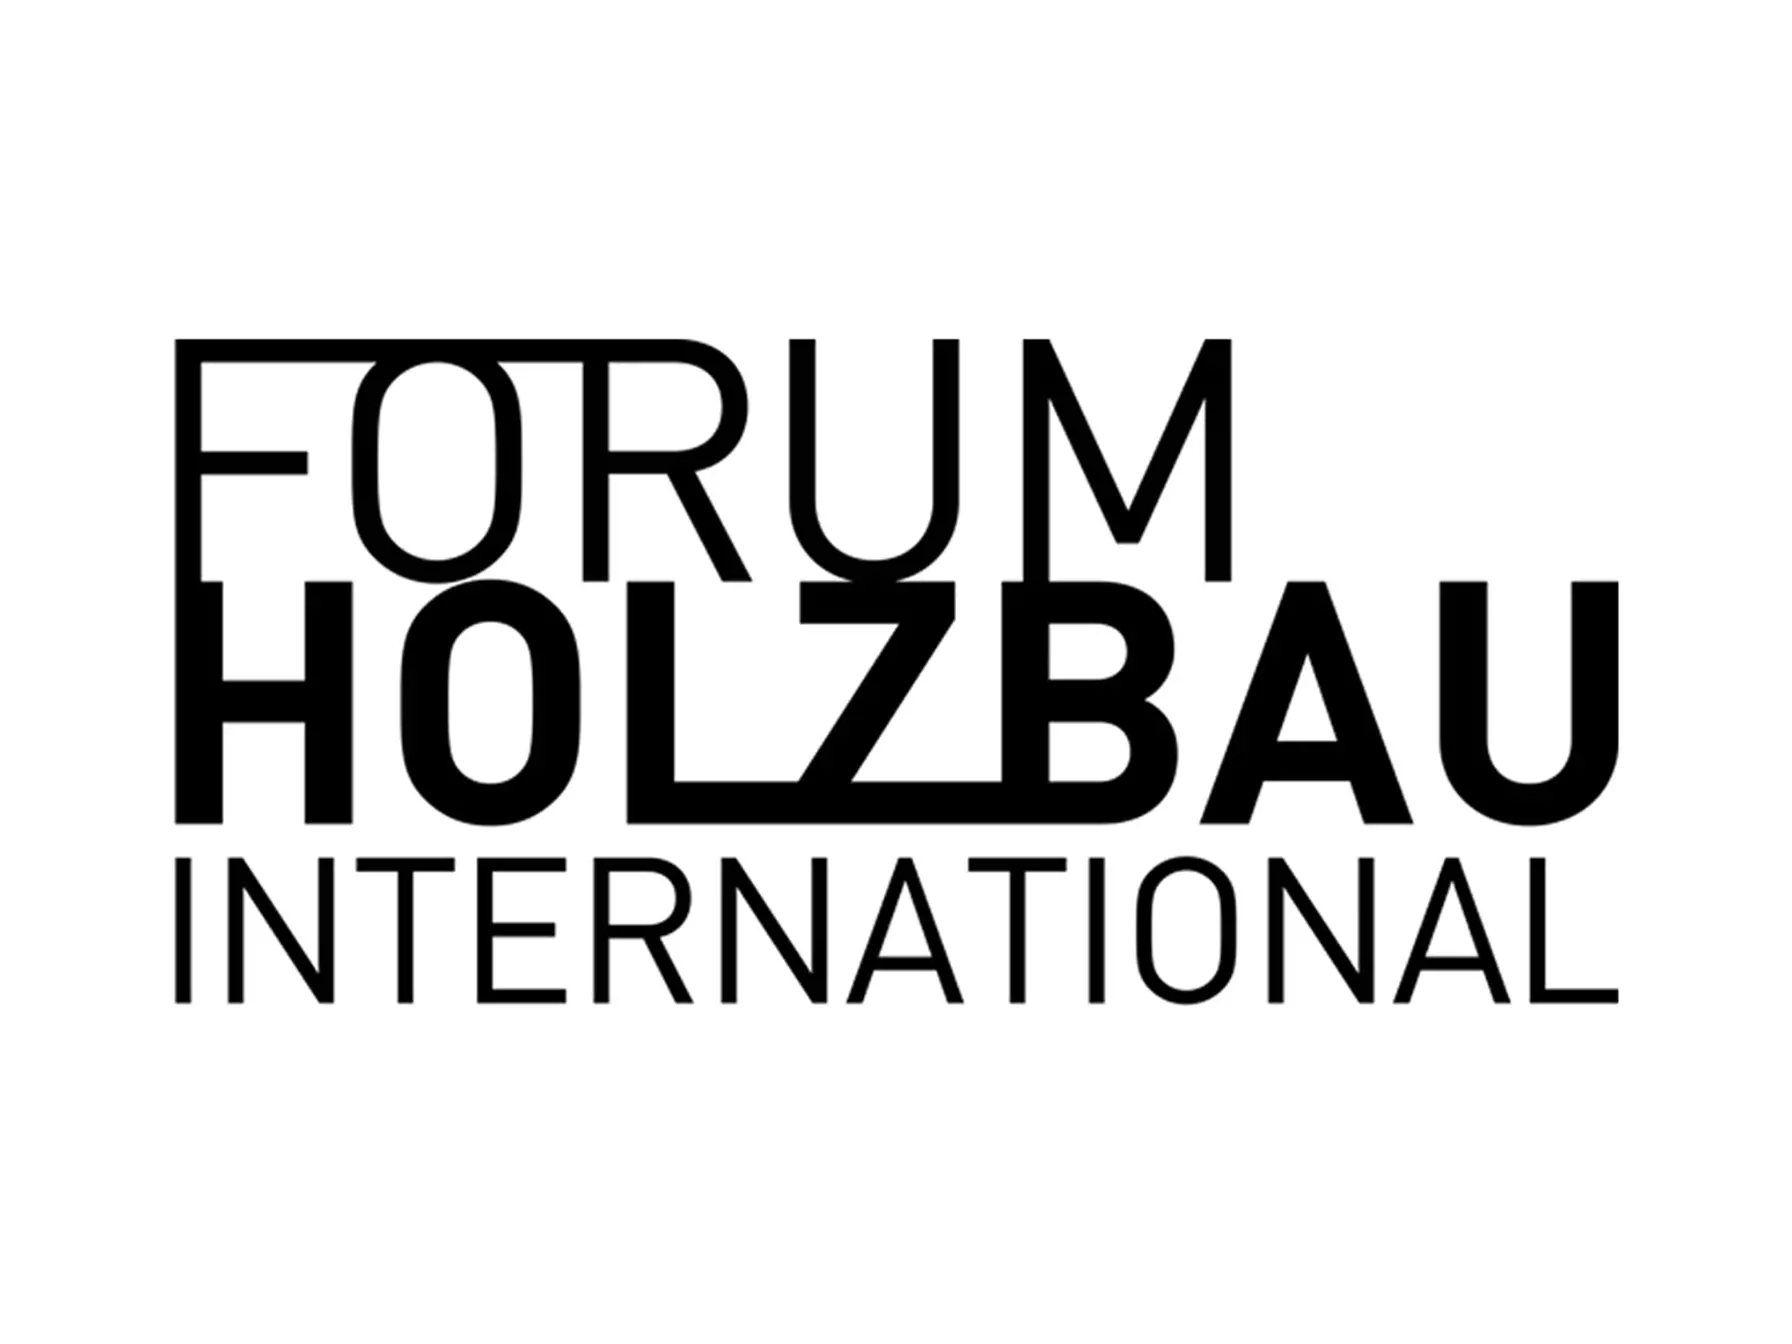 Forum-holzbau-international.jpg